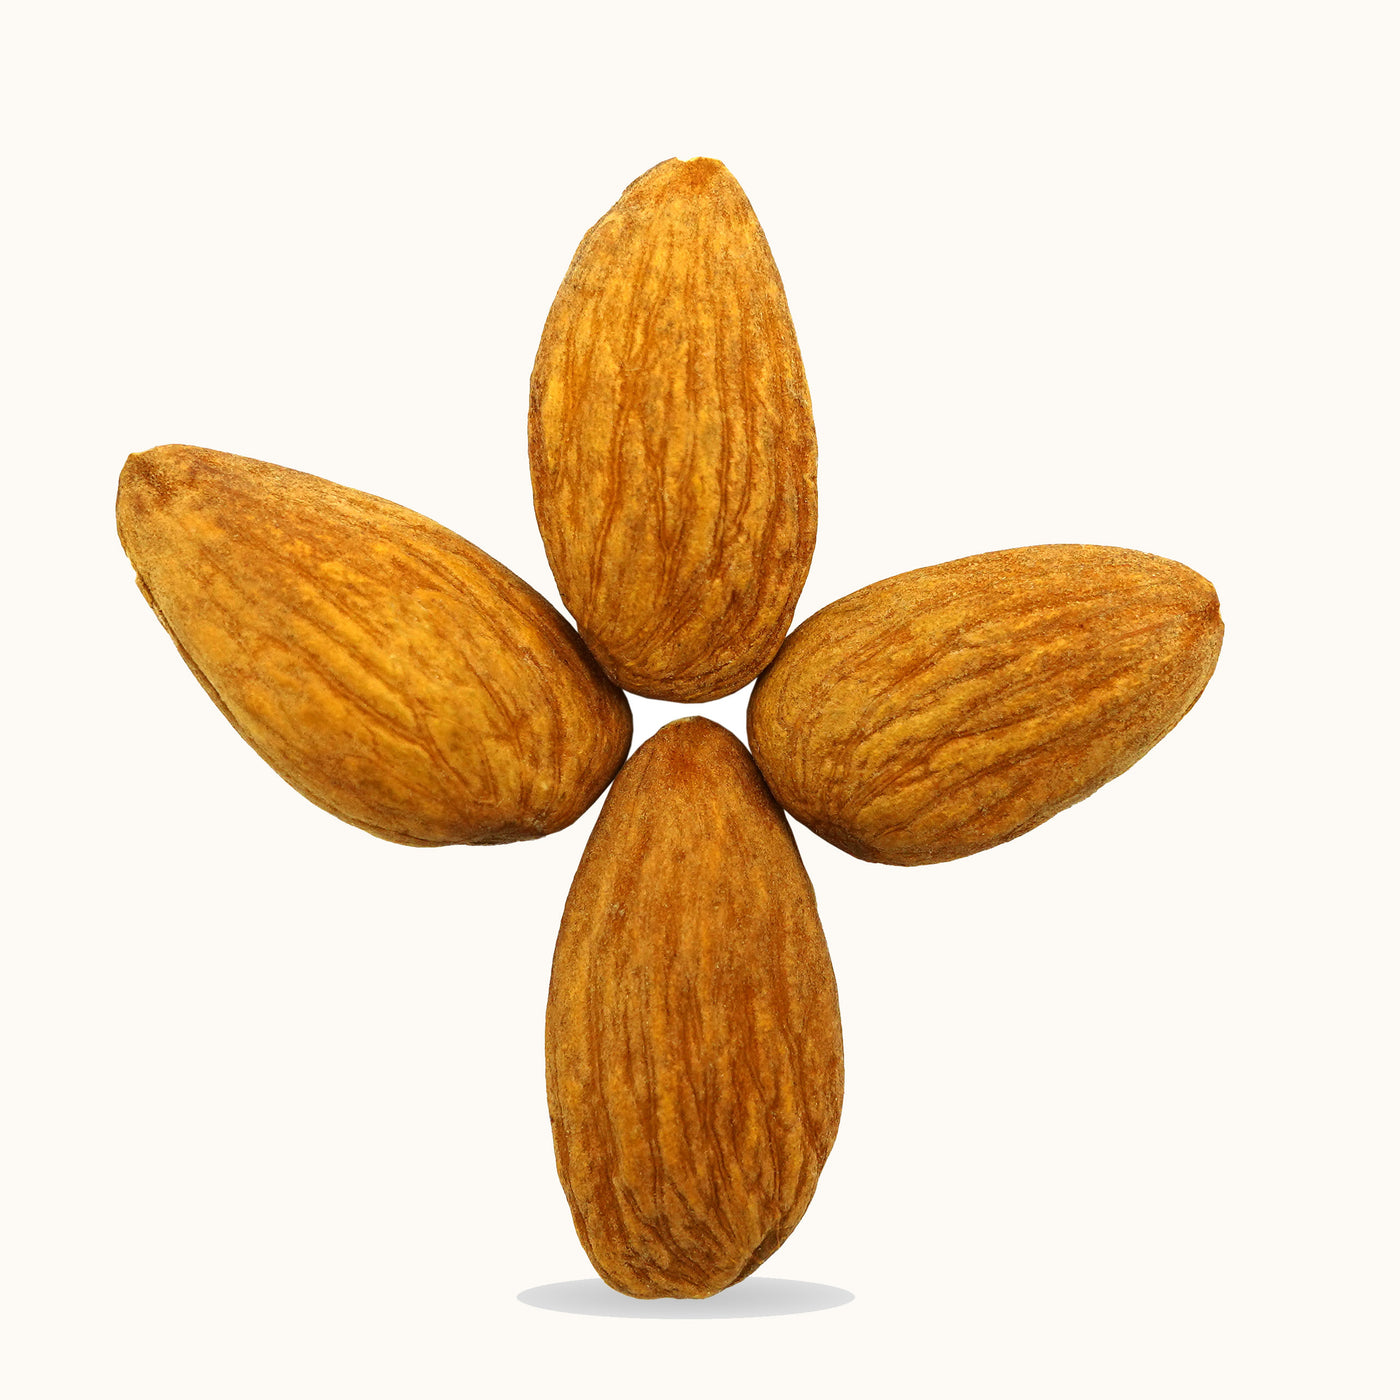 Organic Unsalted California Almonds